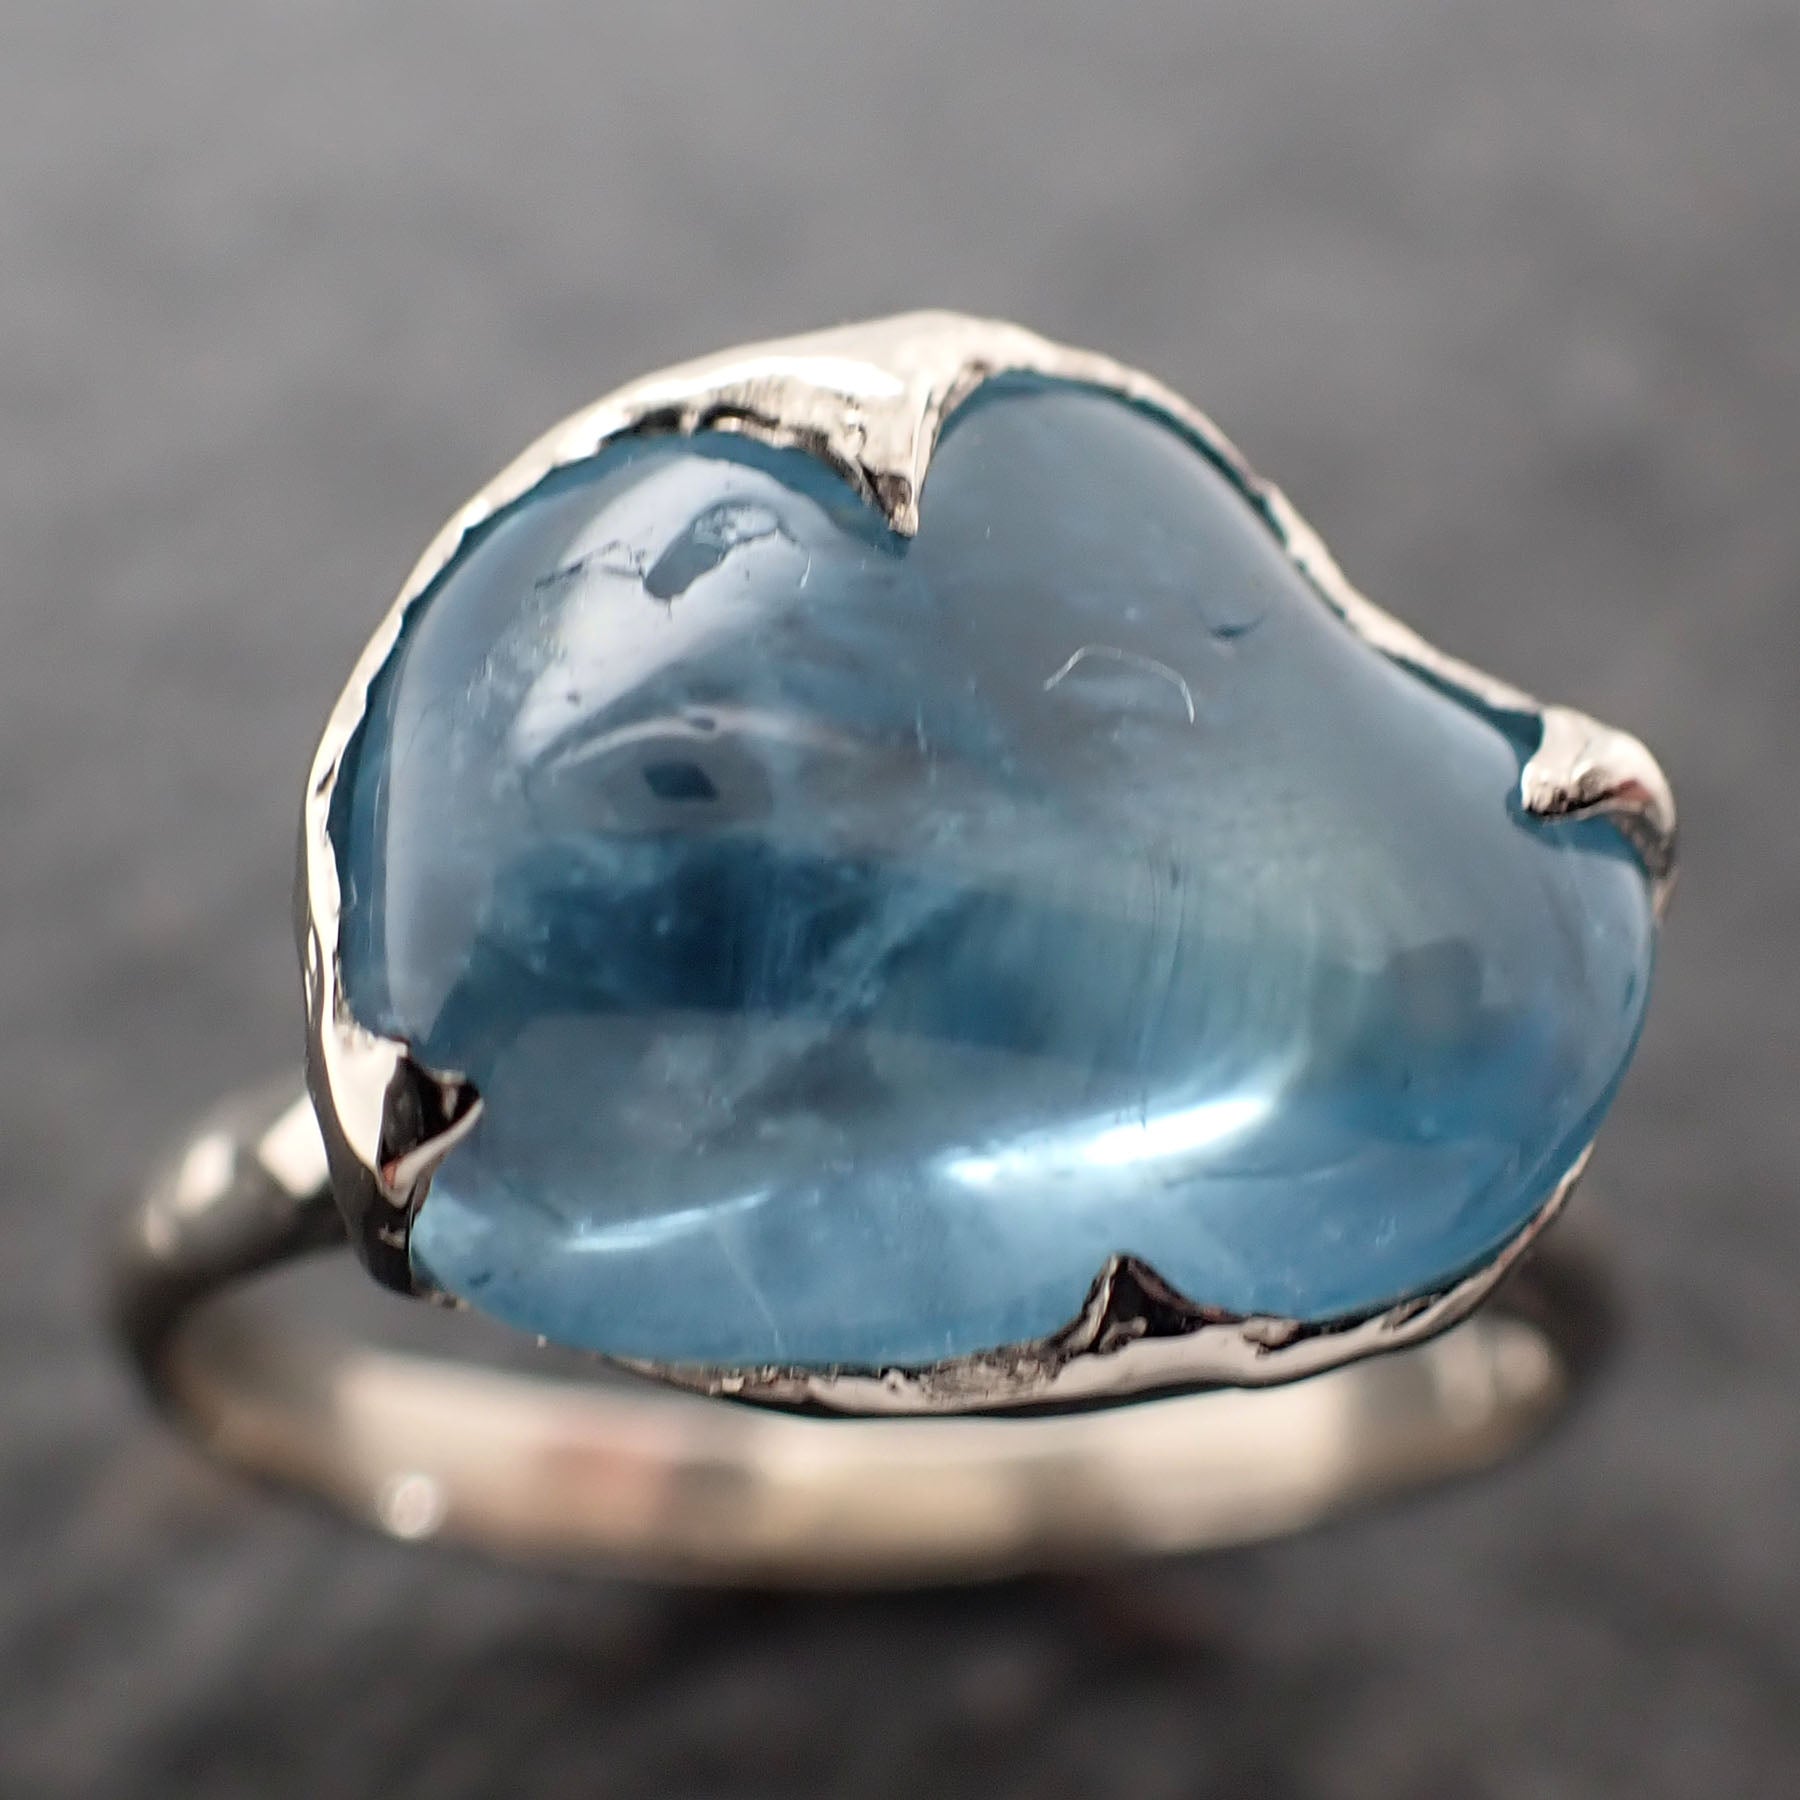 tumbled Aquamarine Solitaire Ring 14k gold Custom One Of a Kind Gemstone Ring Bespoke byAngeline 2749